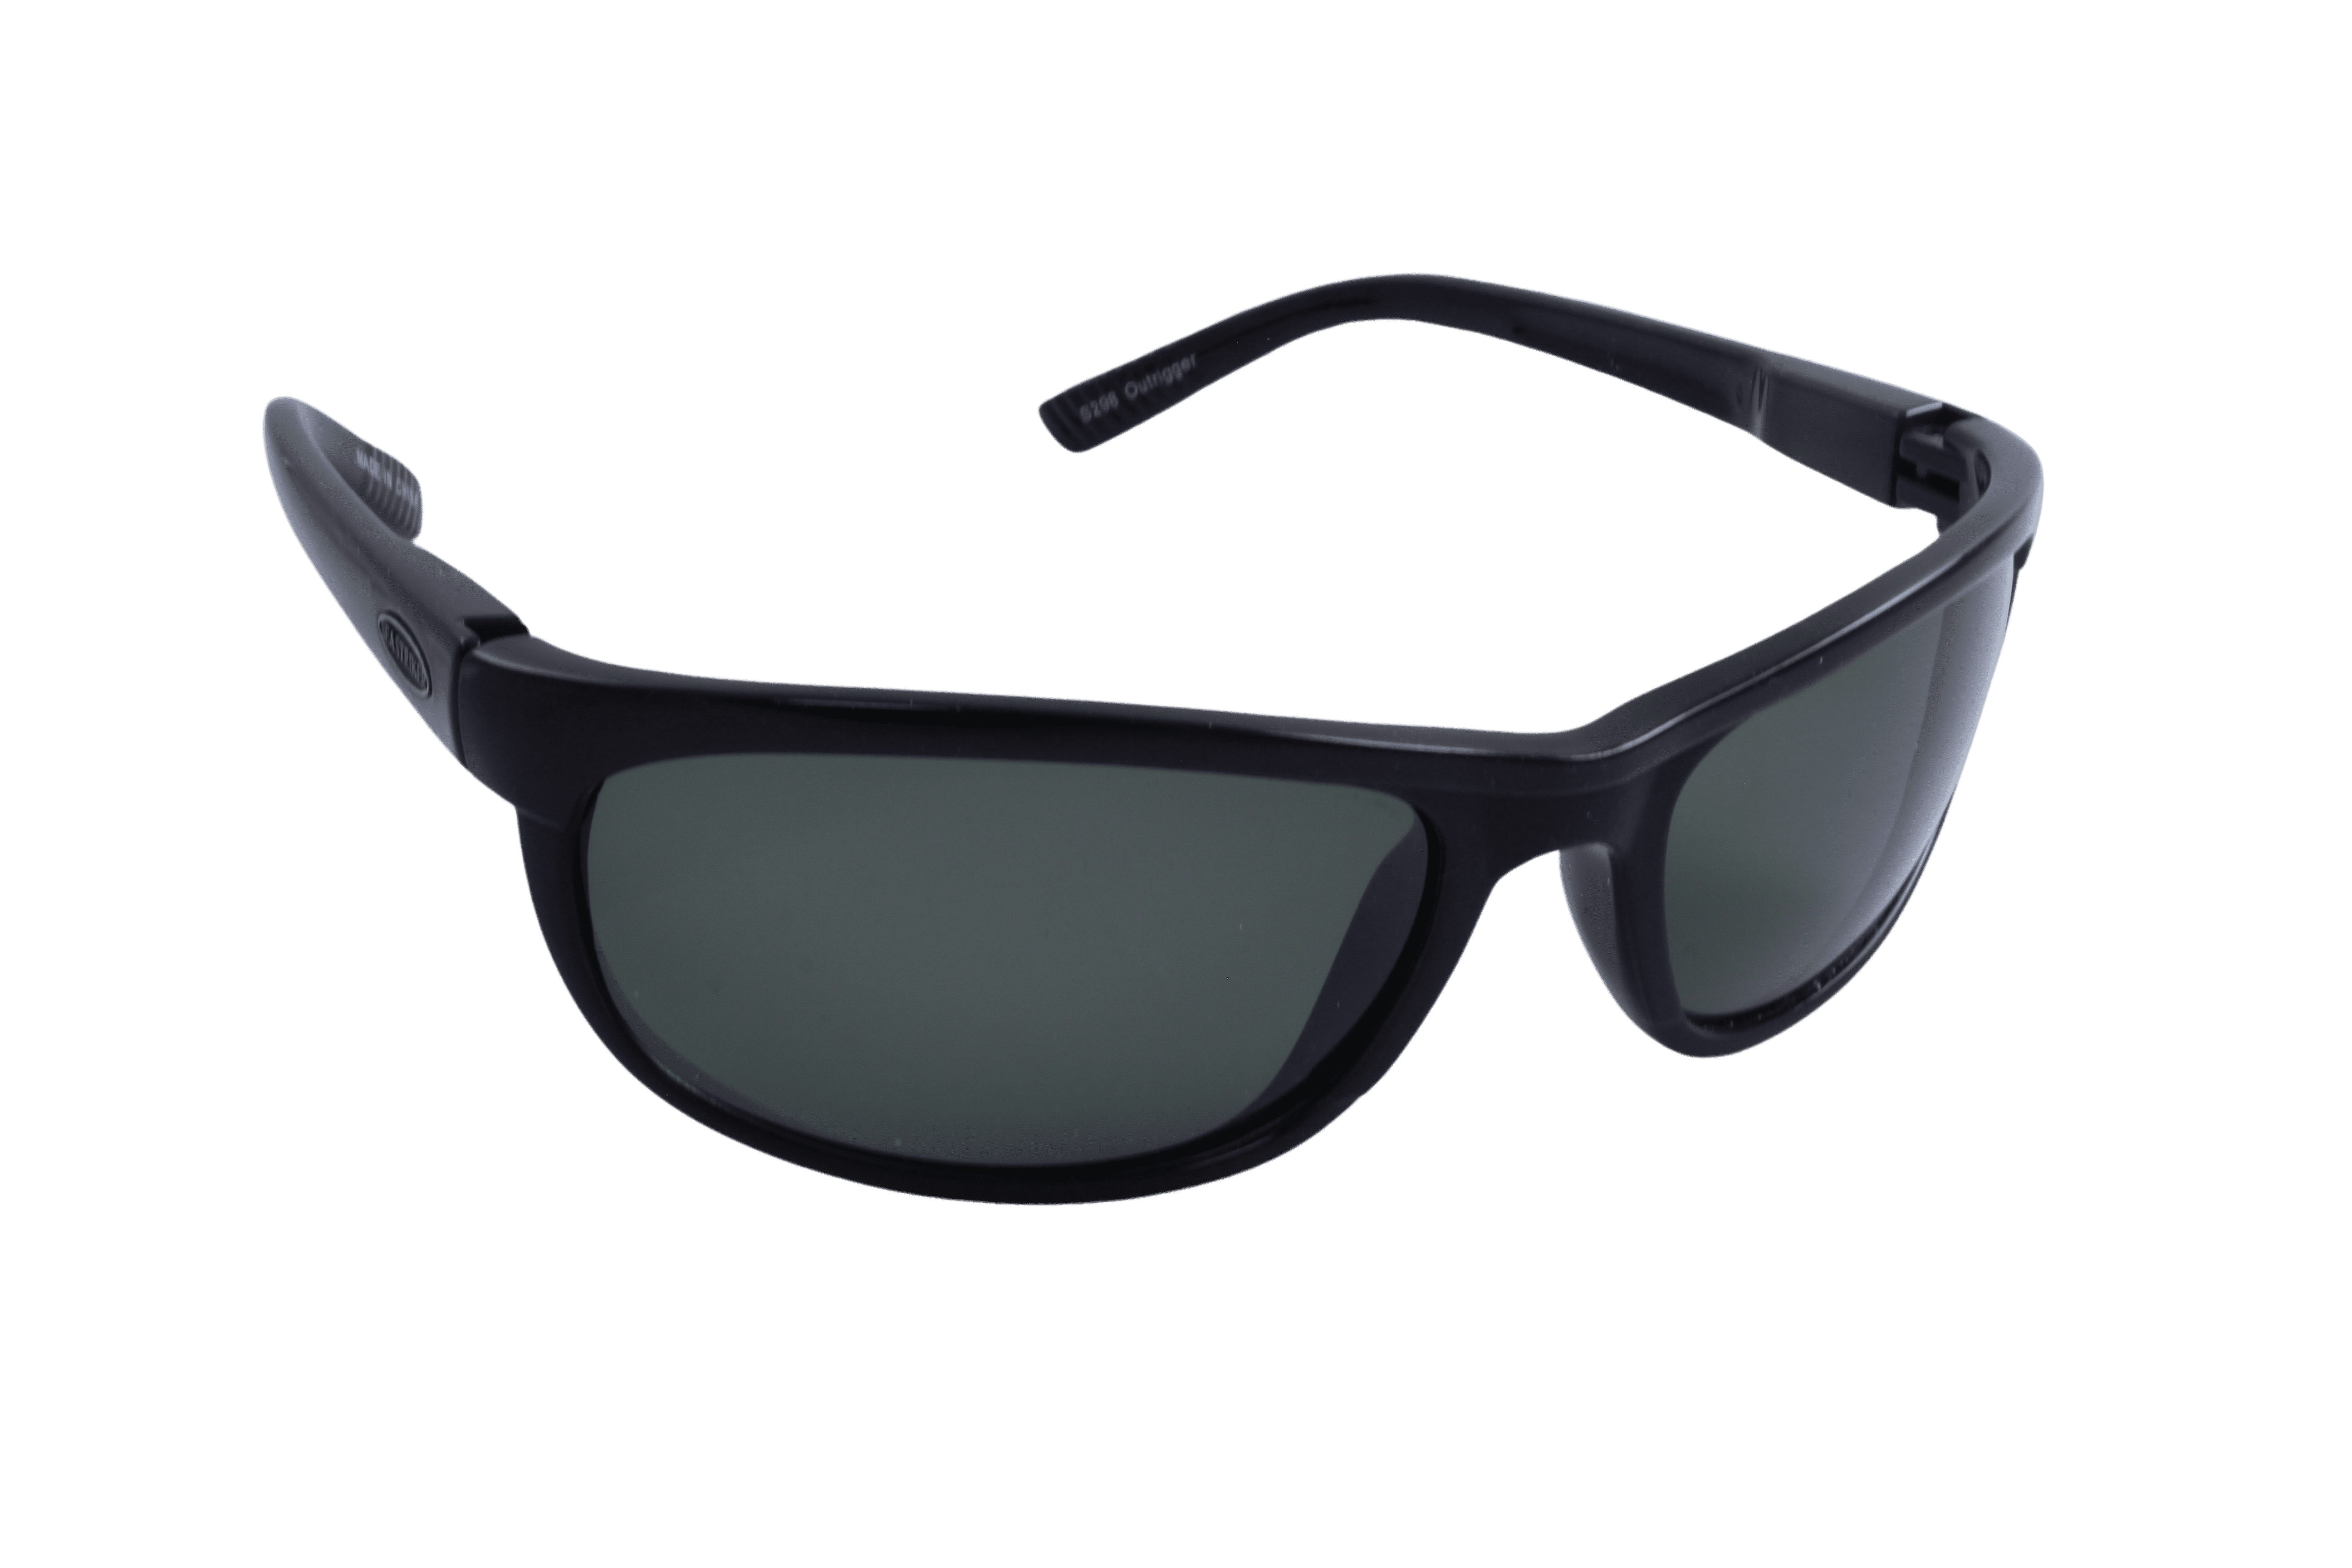 Sea Striker Outrigger Beach Boating Fishing Polarized Sunglasses Men Women  Black Frame w/Smoke Lens 